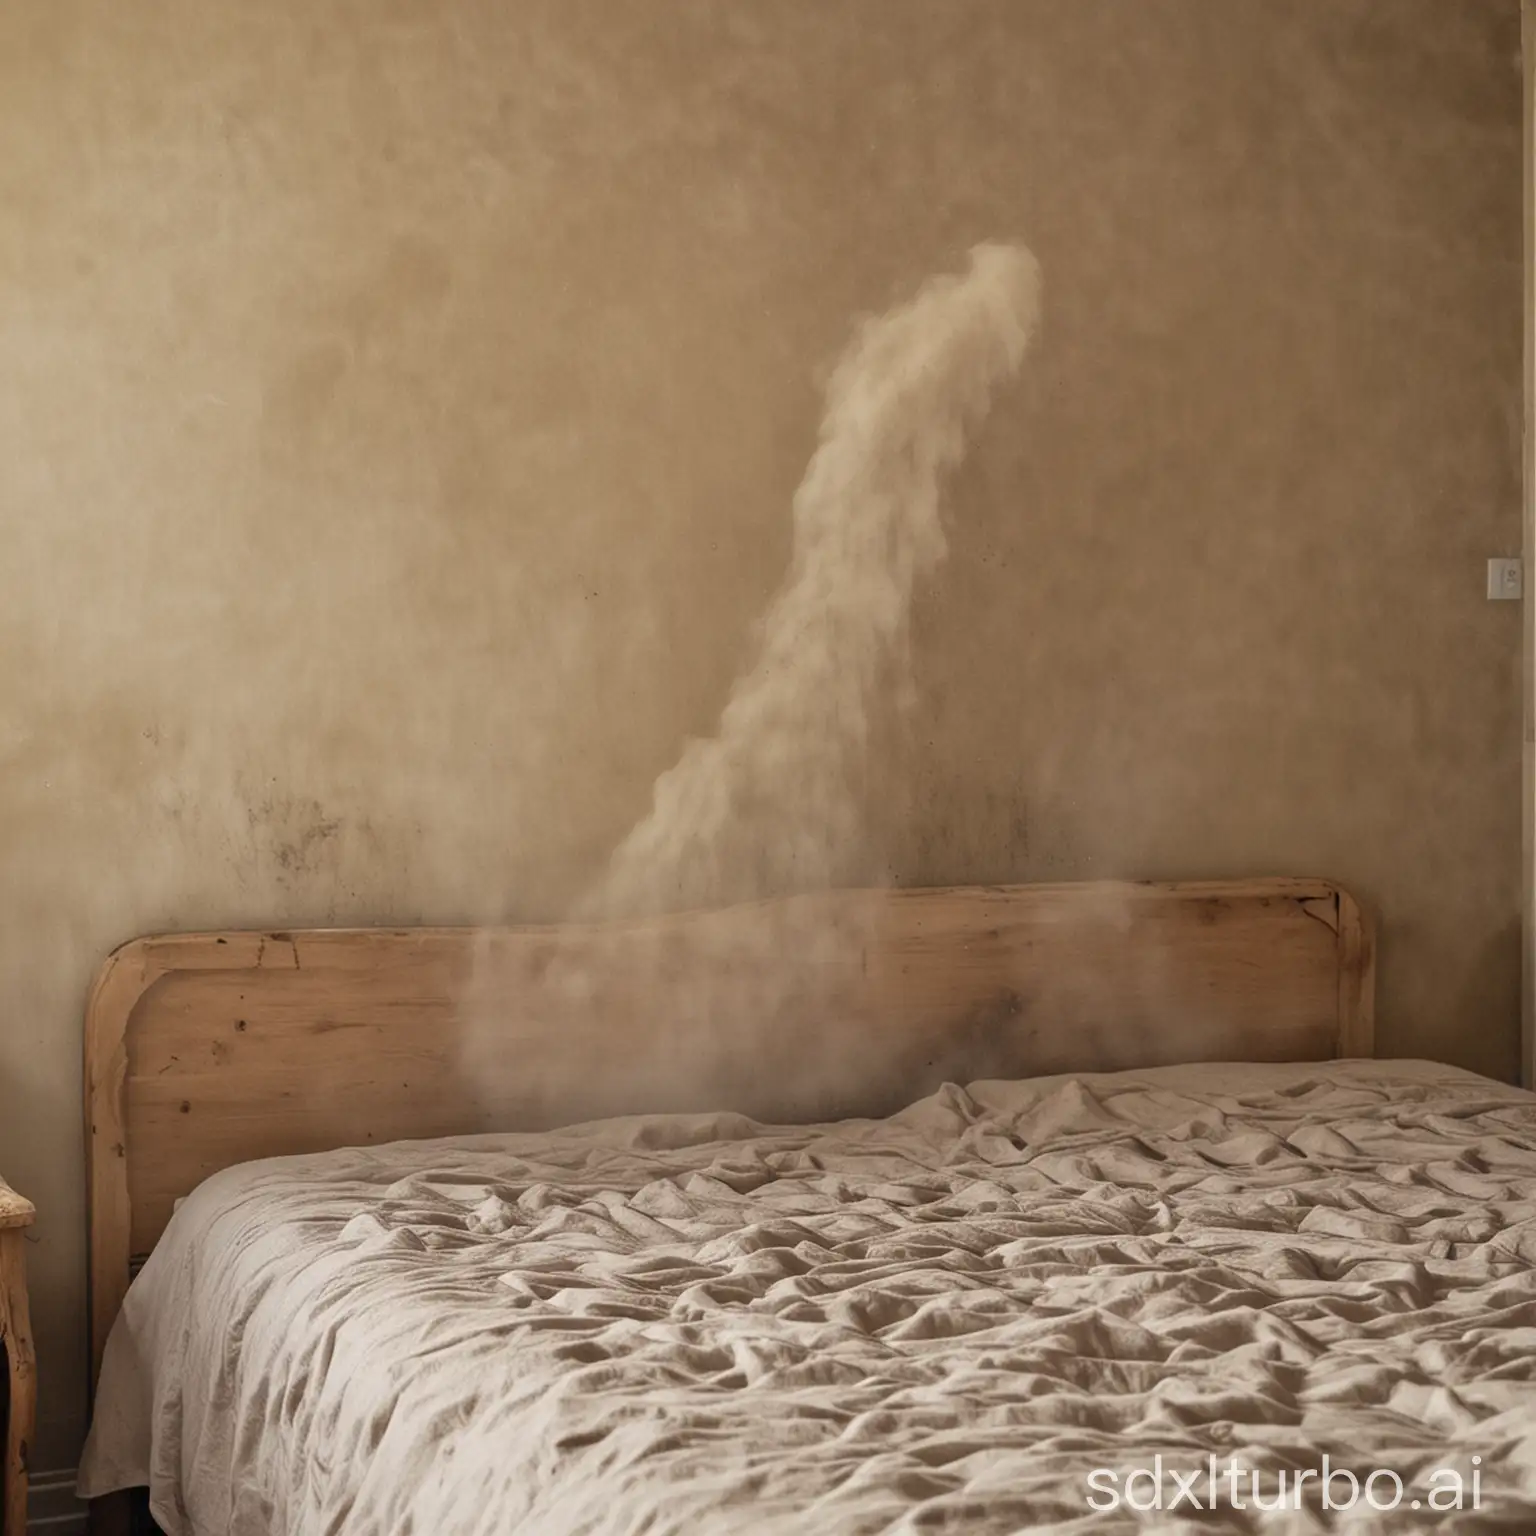 dust in the bedroom